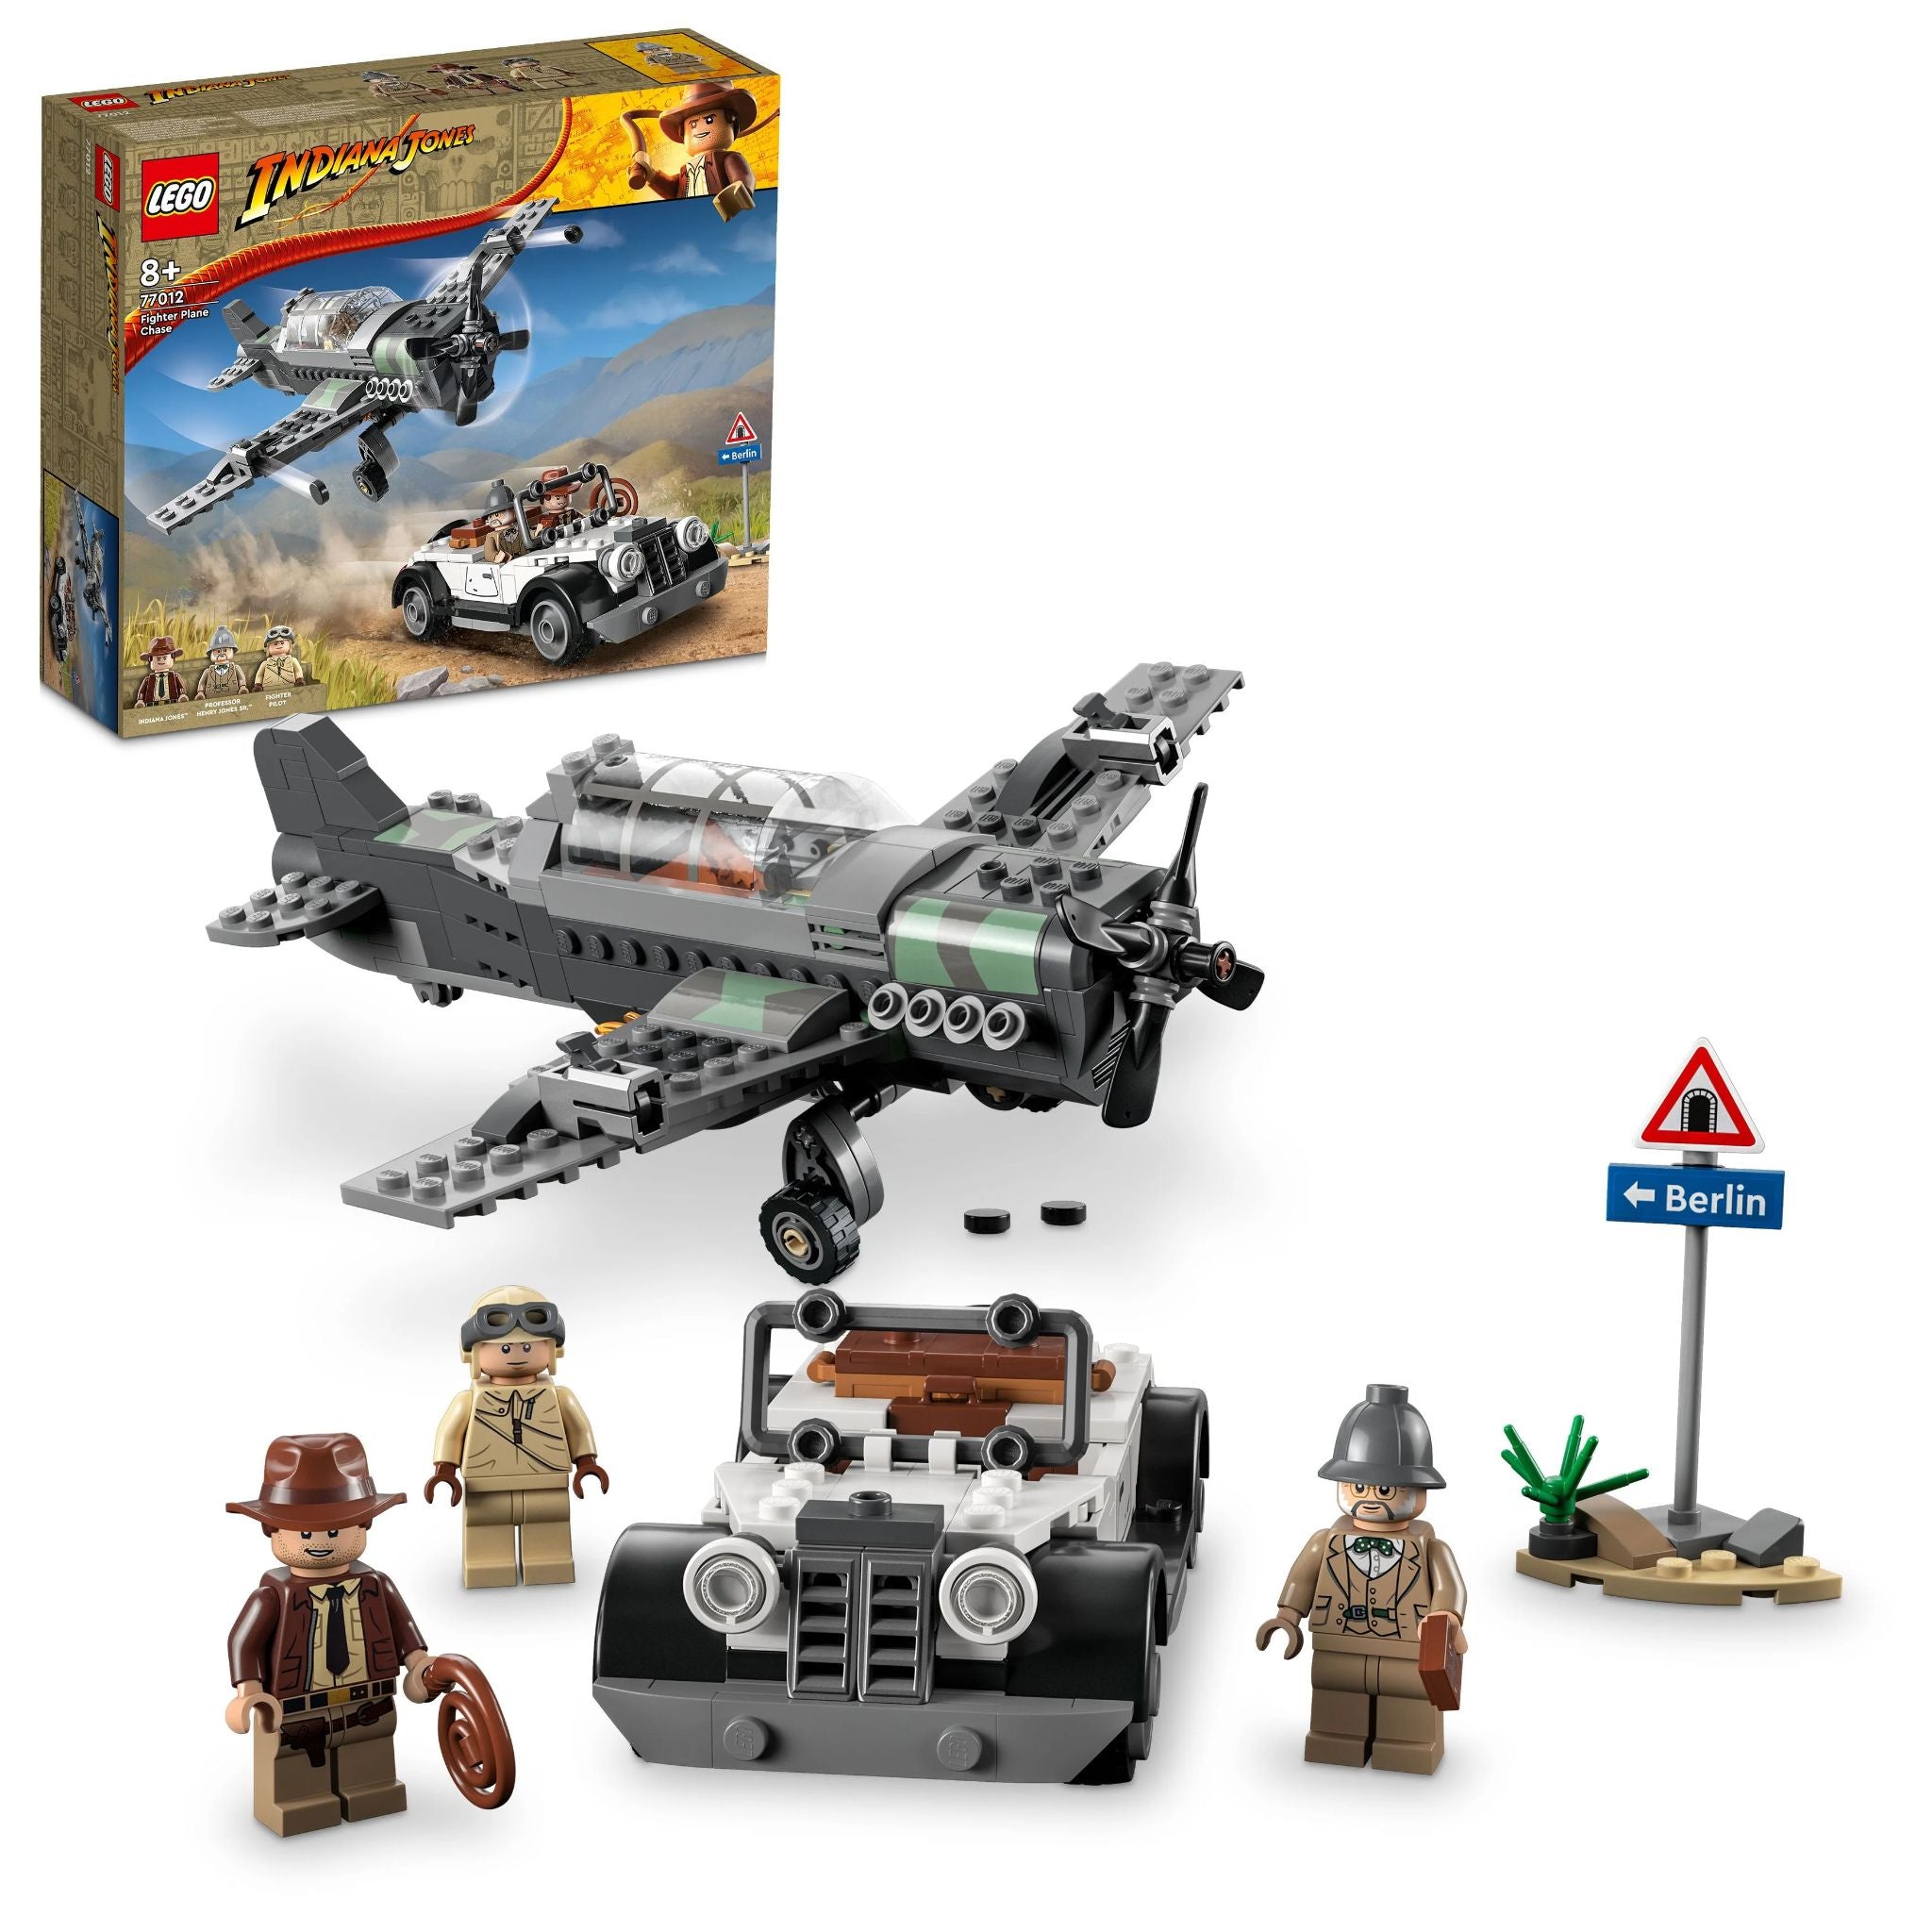 LEGO Indiana Jones: Fighter Plane Chase (77012)